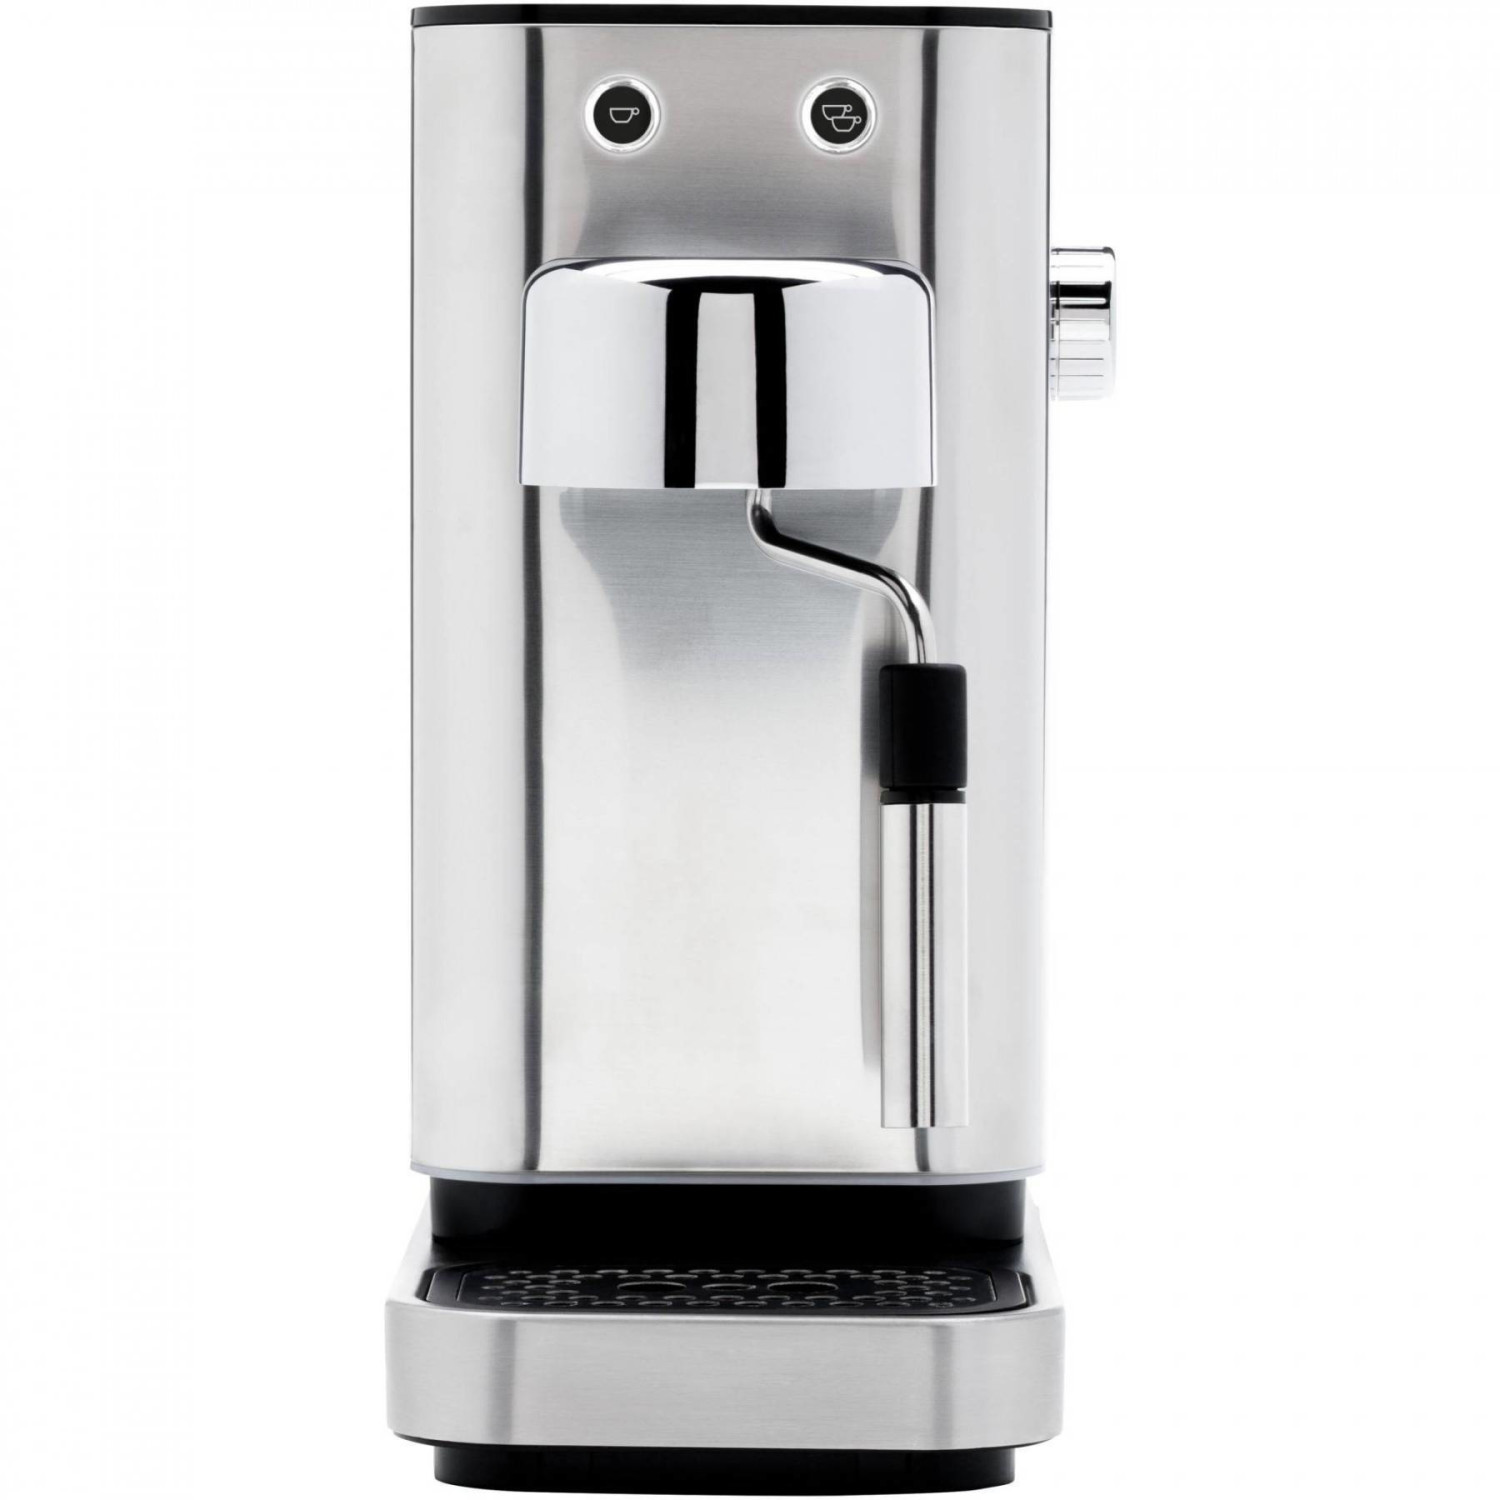 WMF Lumero Espresso Machine desde 190,00 €